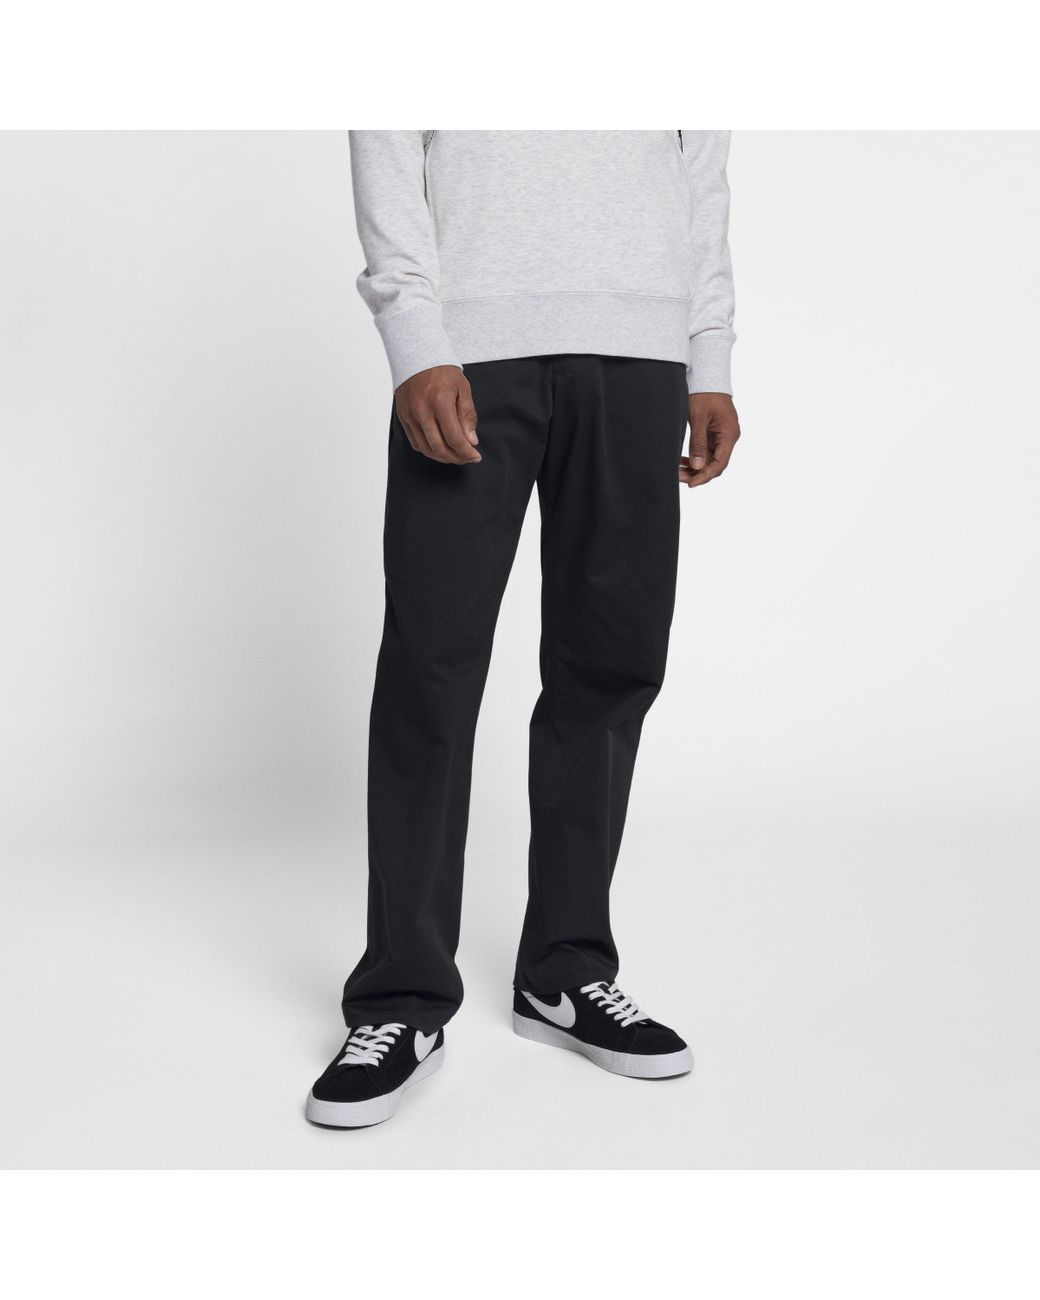 Nike Sb Dri-fit Loose Fit Pants in Black for | Lyst UK